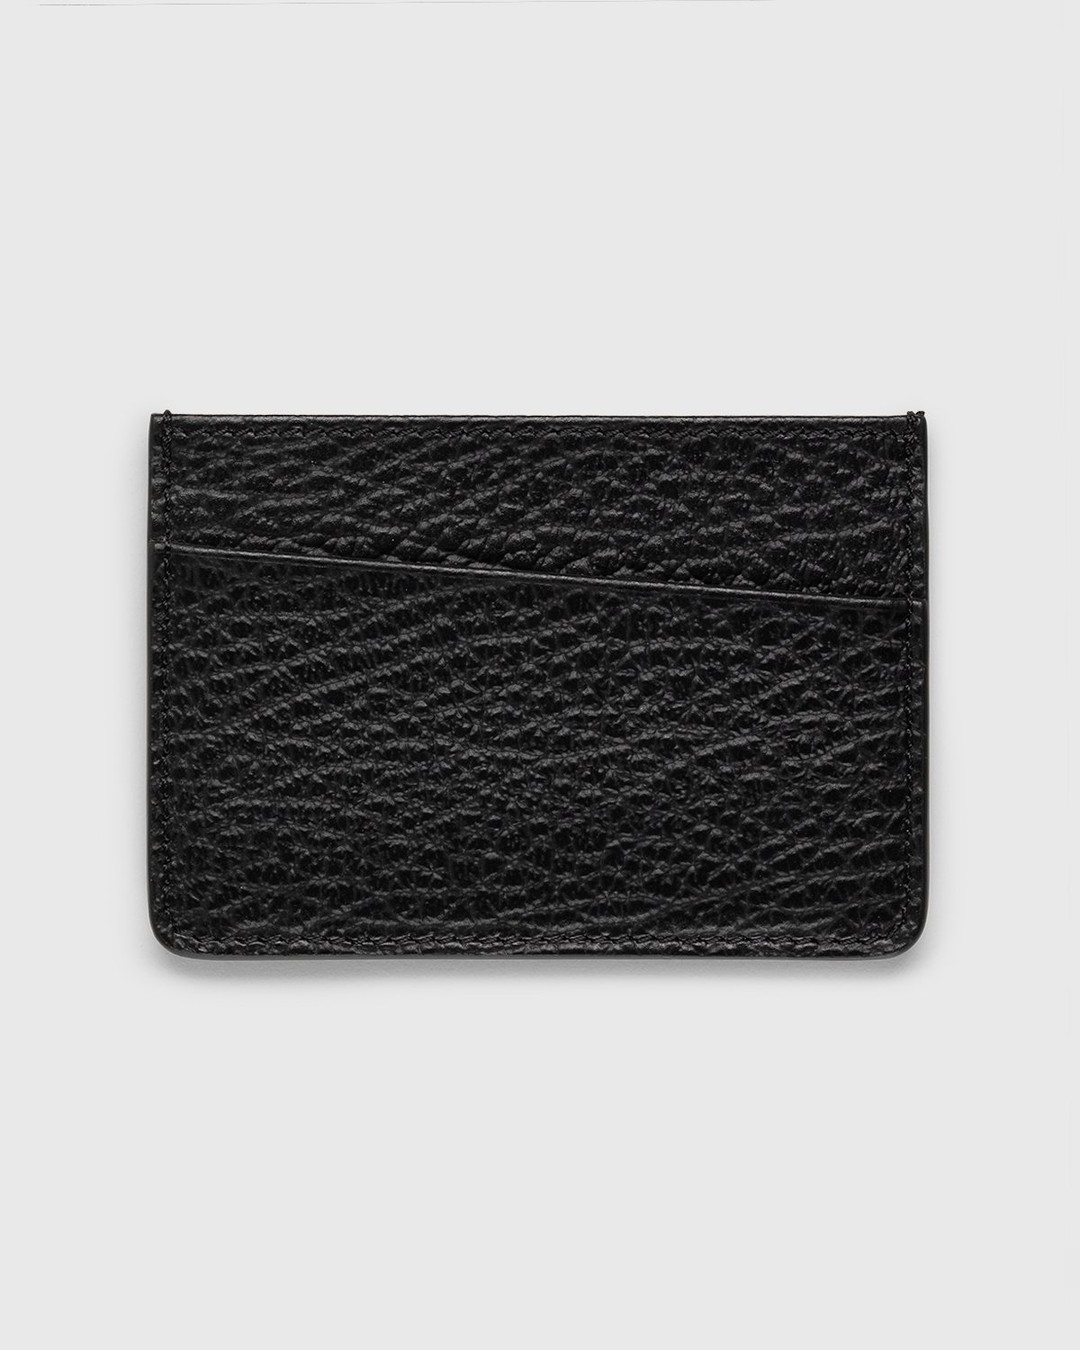 Maison Margiela – Leather Card Holder Black | Highsnobiety Shop